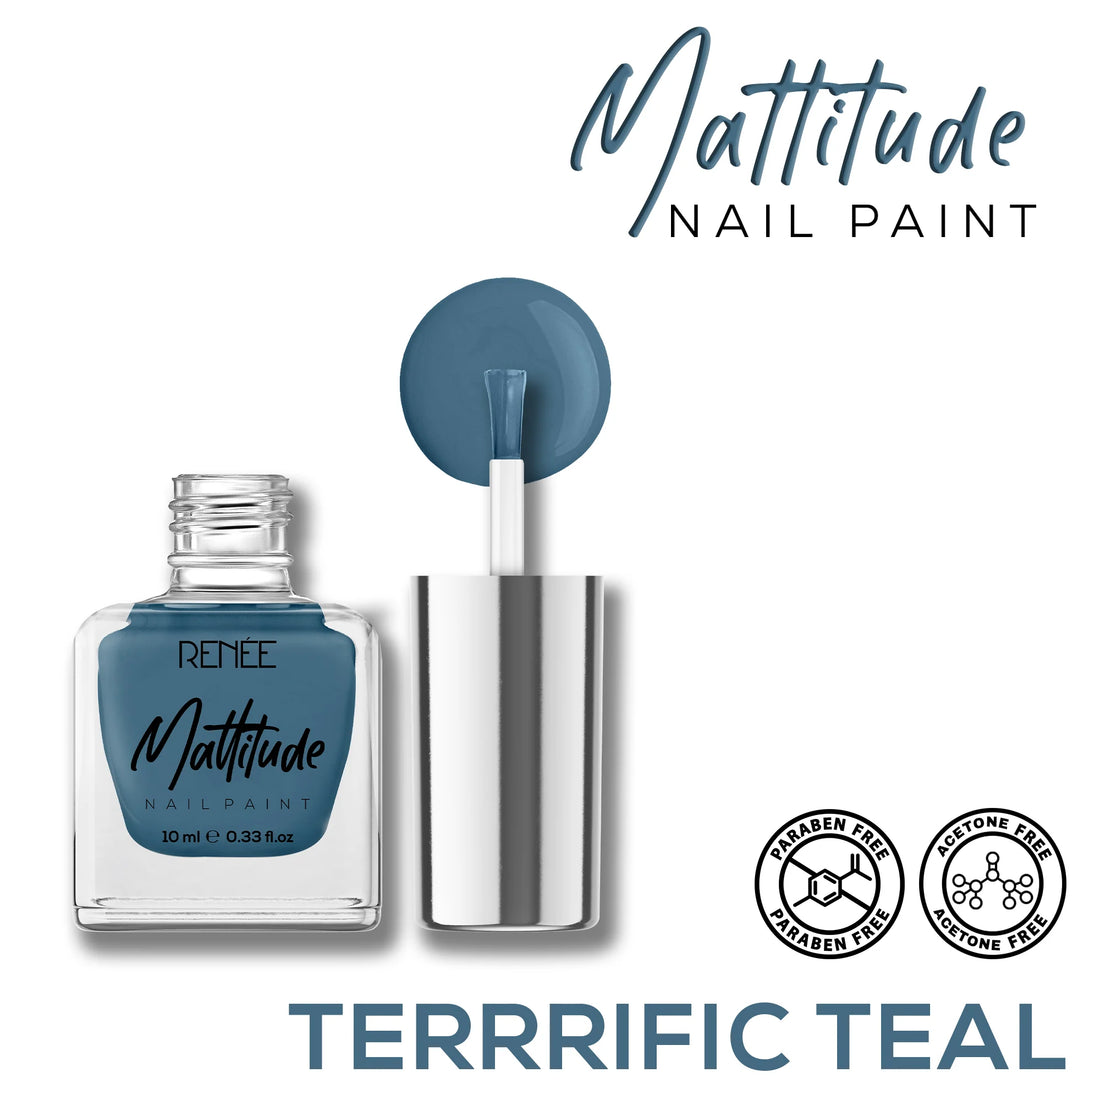 RENEE Mattitude Nail Paint 10ml Terrific Teal